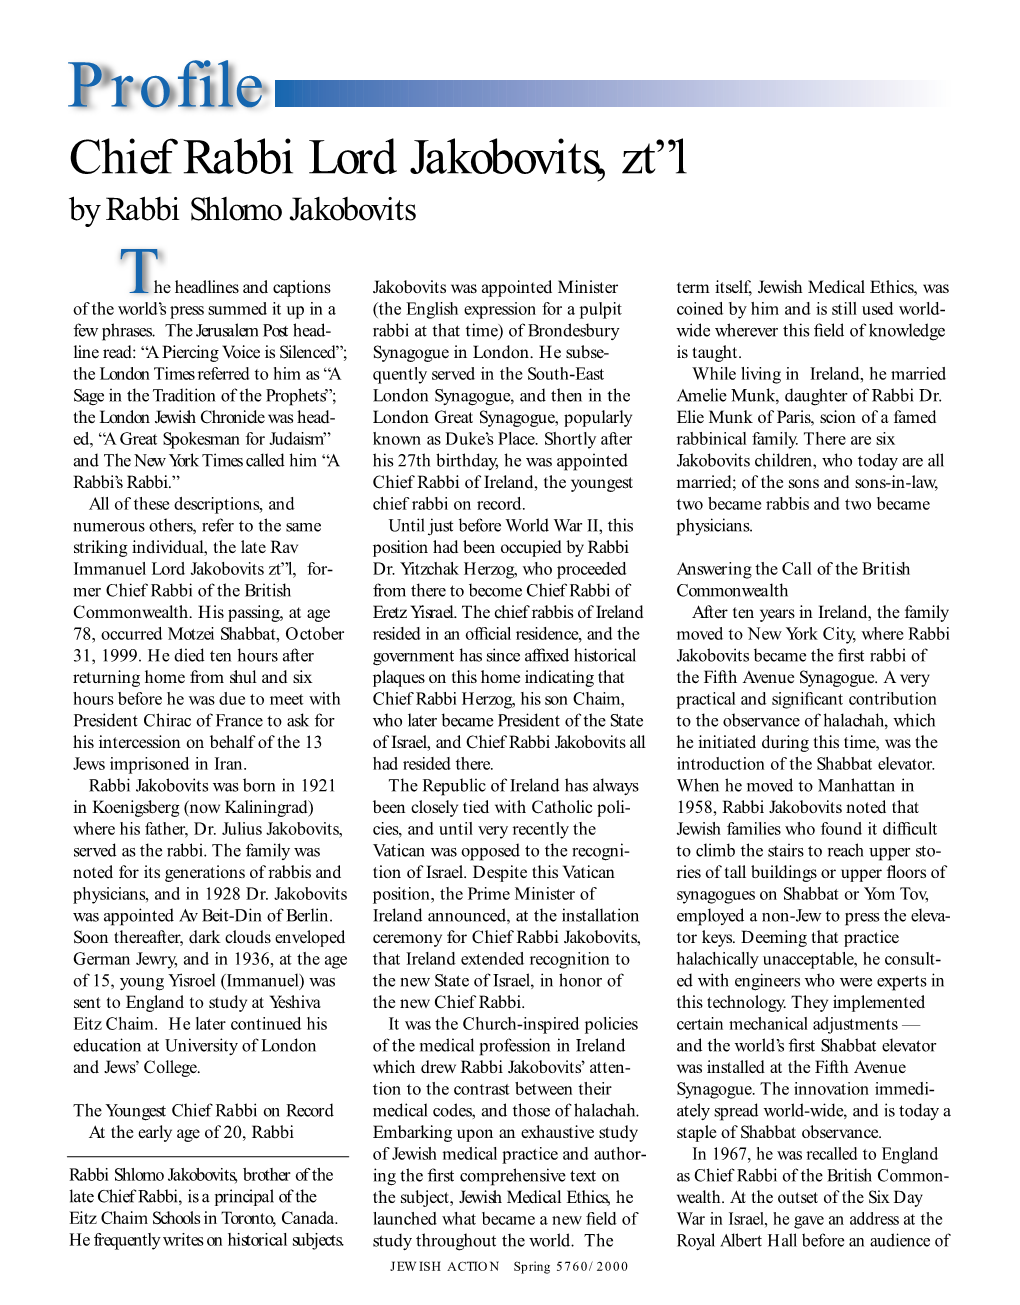 Profile Chief Rabbi Lord Jakobovits, Zt”L by Rabbi Shlomo Jakobovits